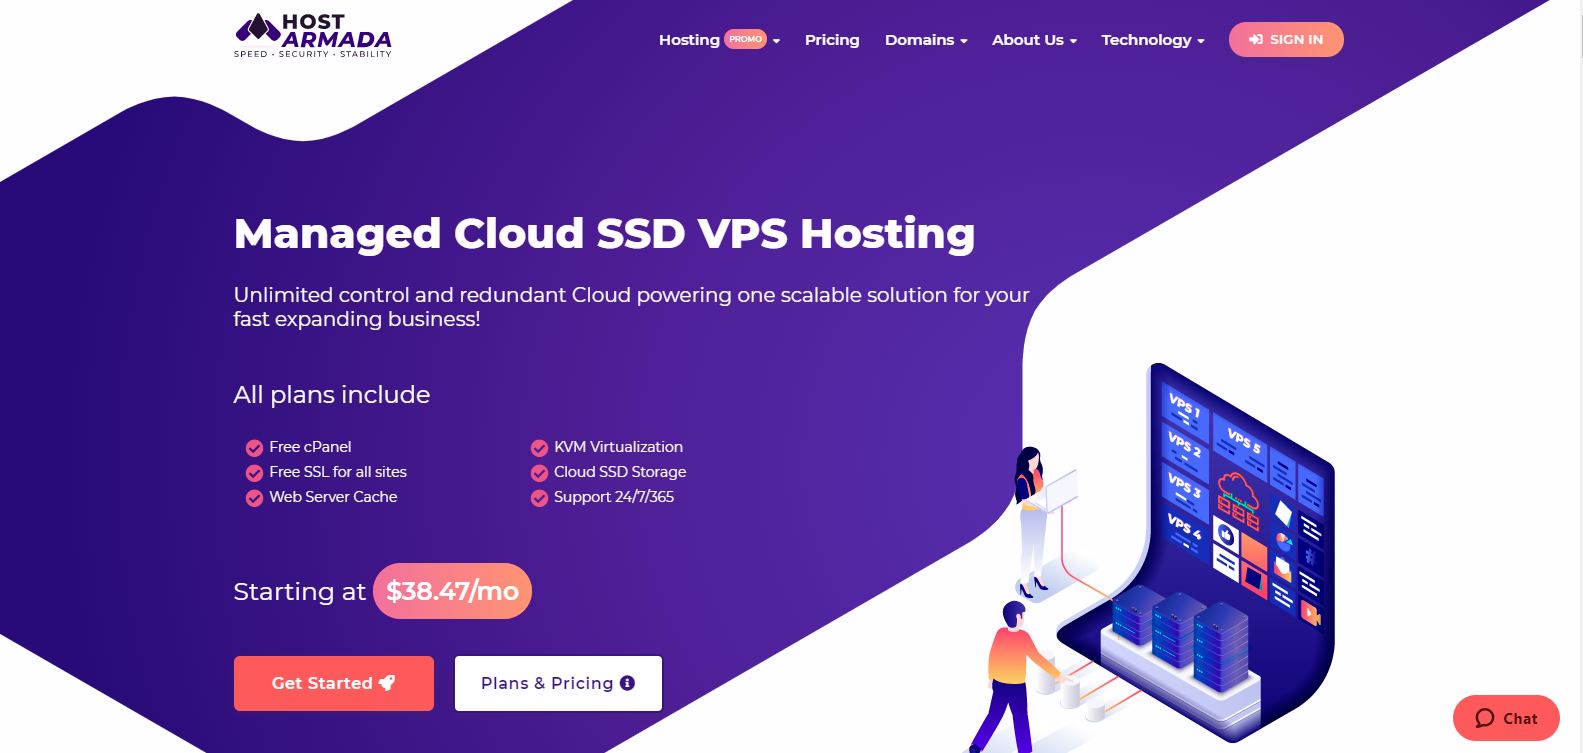 Host Armada Cloud SSD VPS Hosting